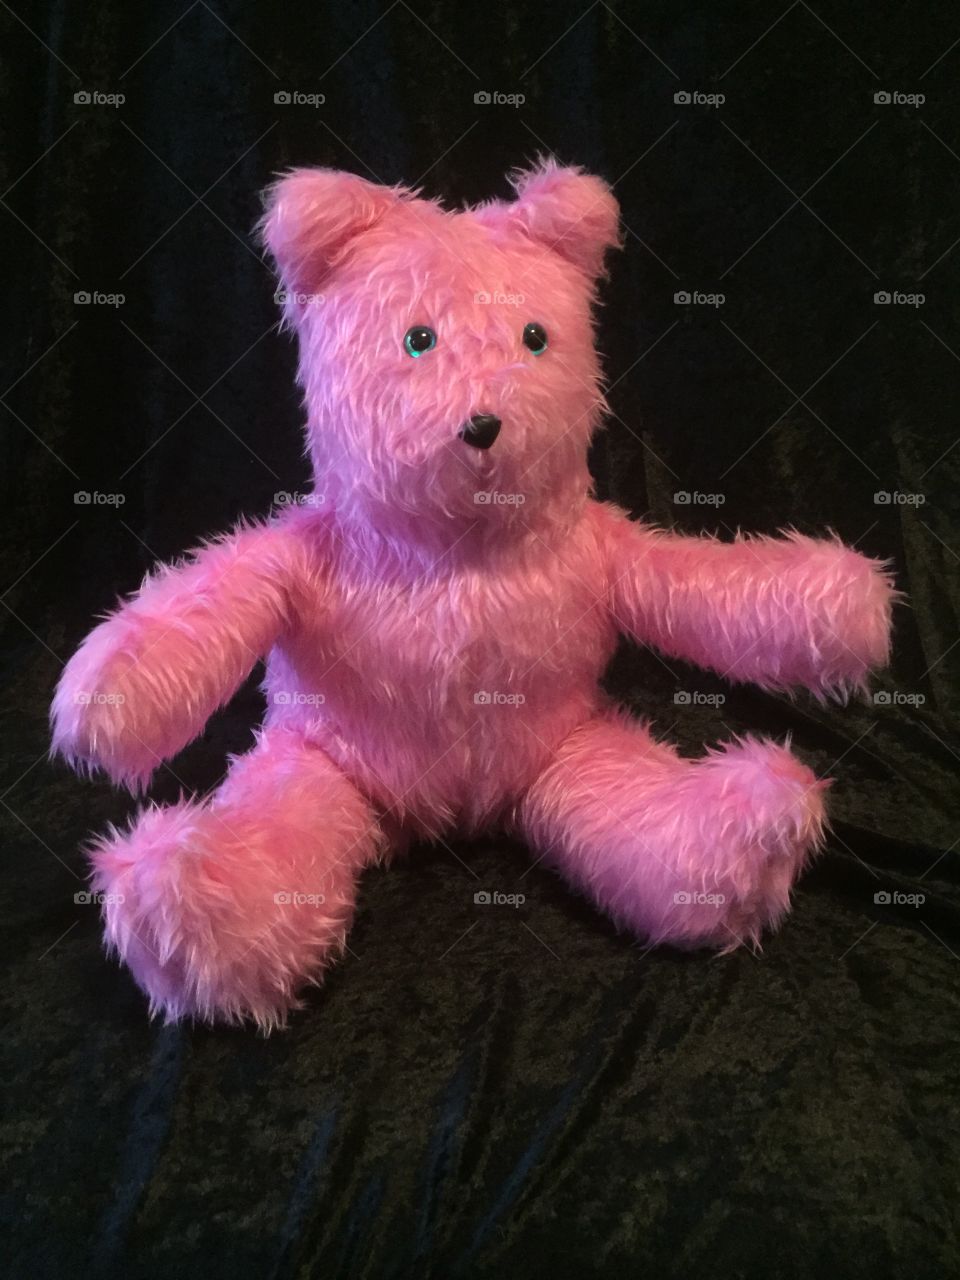 A fuzzy pink teddy bear! 